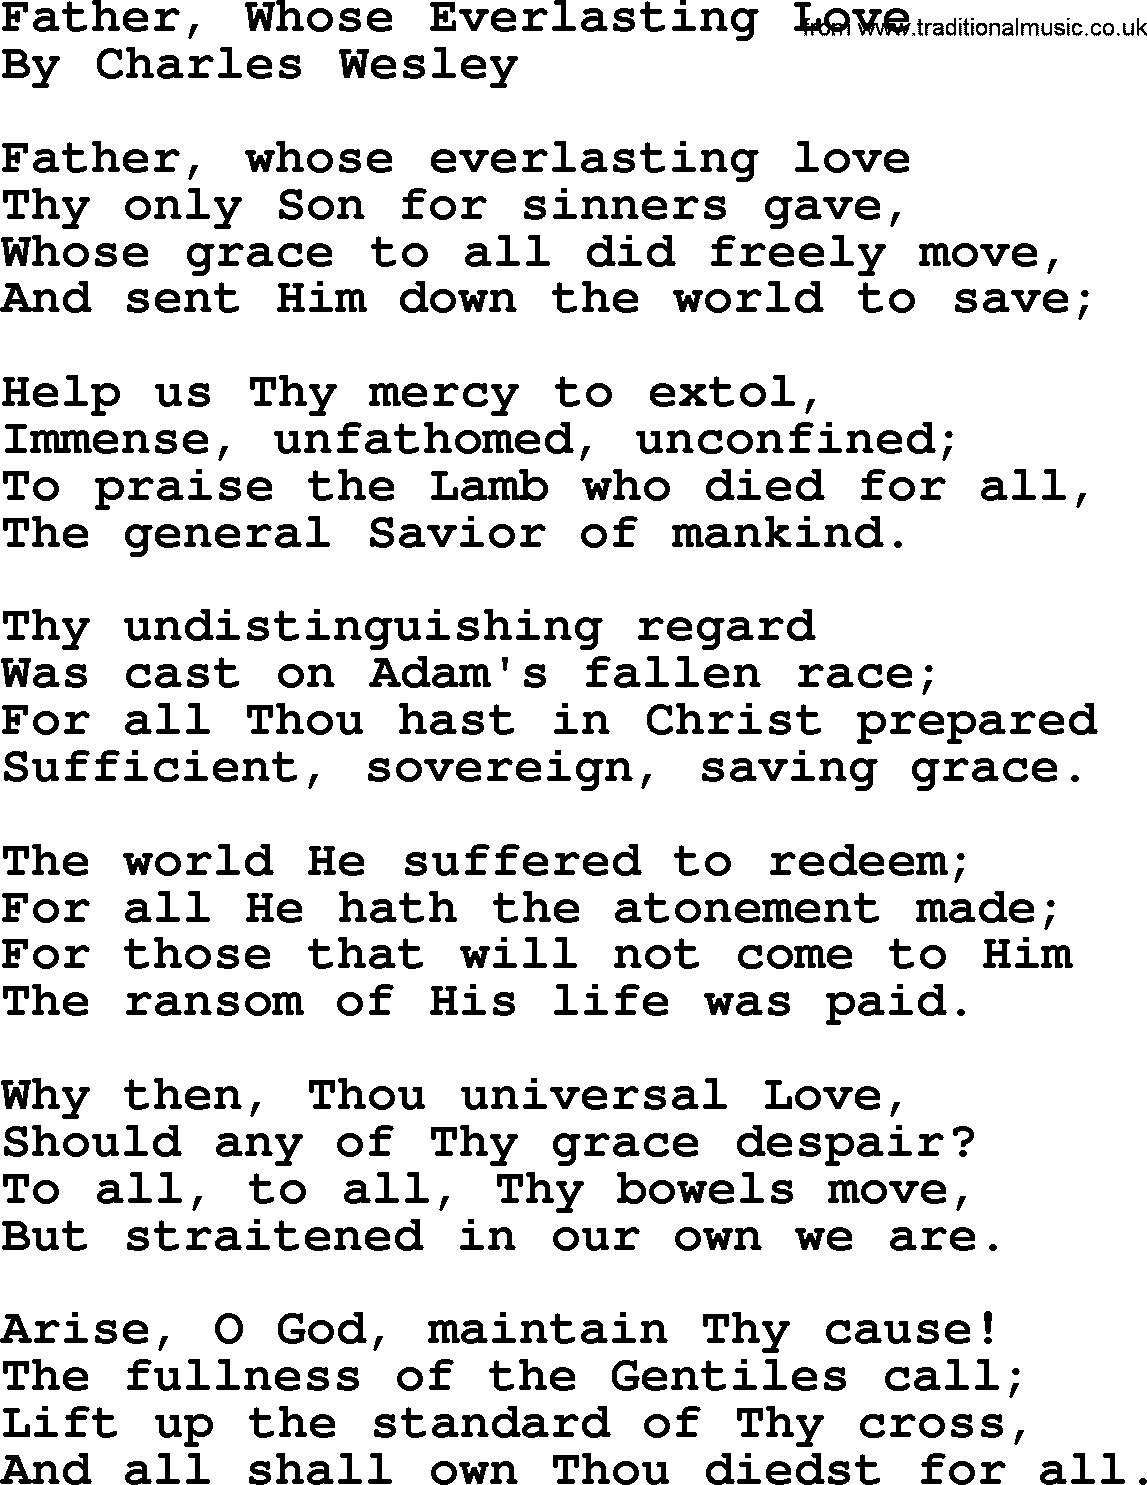 Charles Wesley hymn: Father, Whose Everlasting Love, lyrics